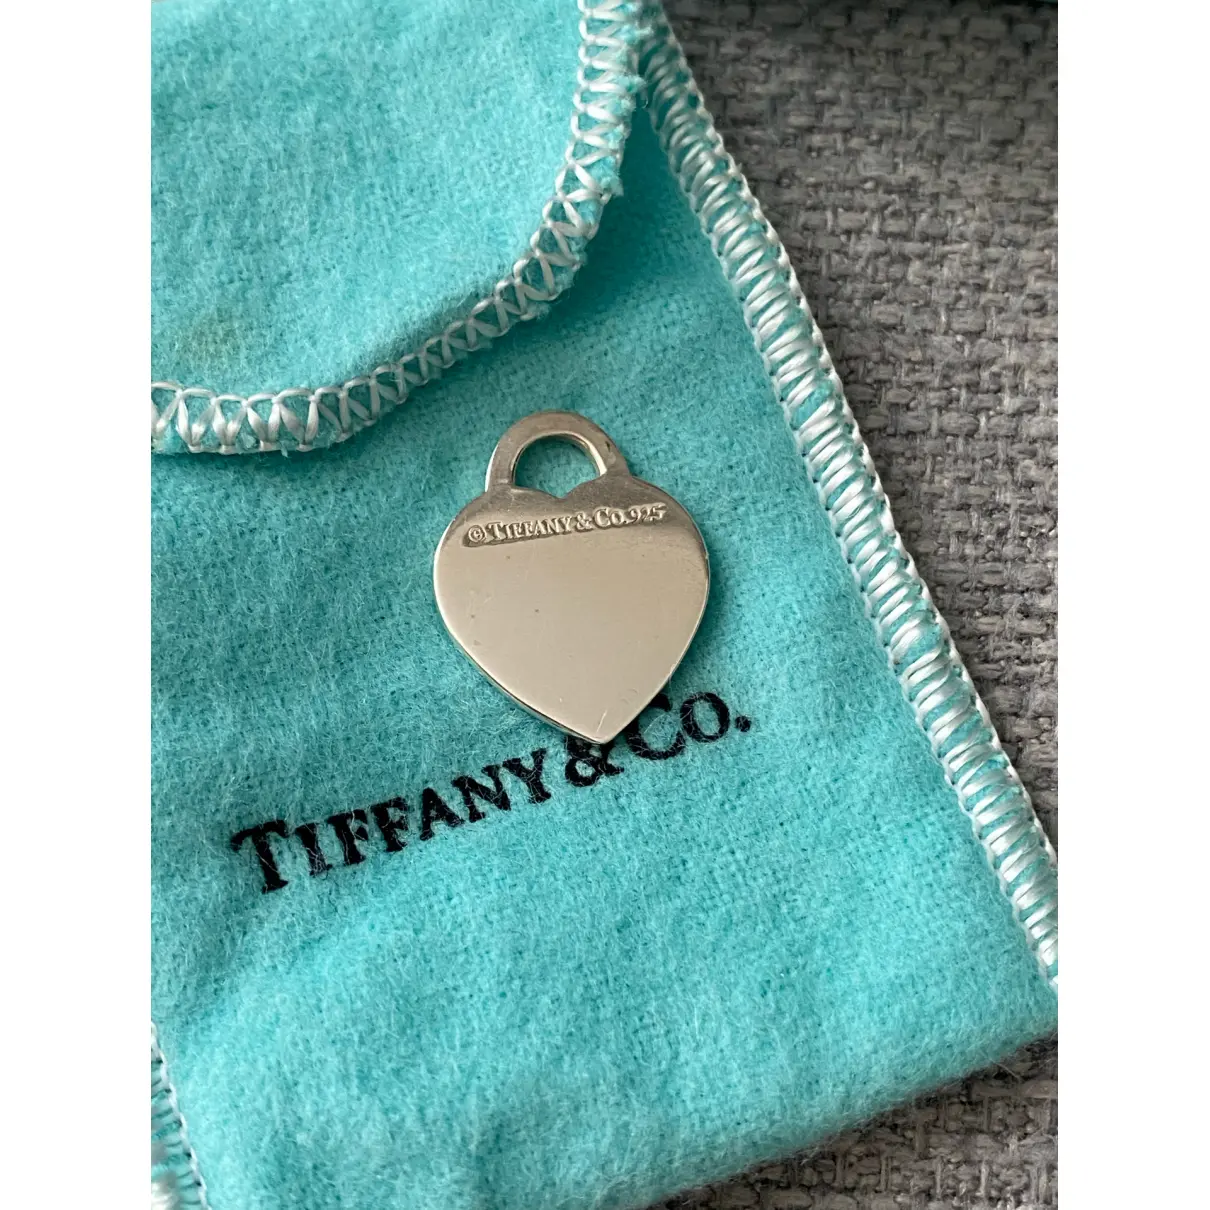 Buy Tiffany & Co Return to Tiffany silver pendant online